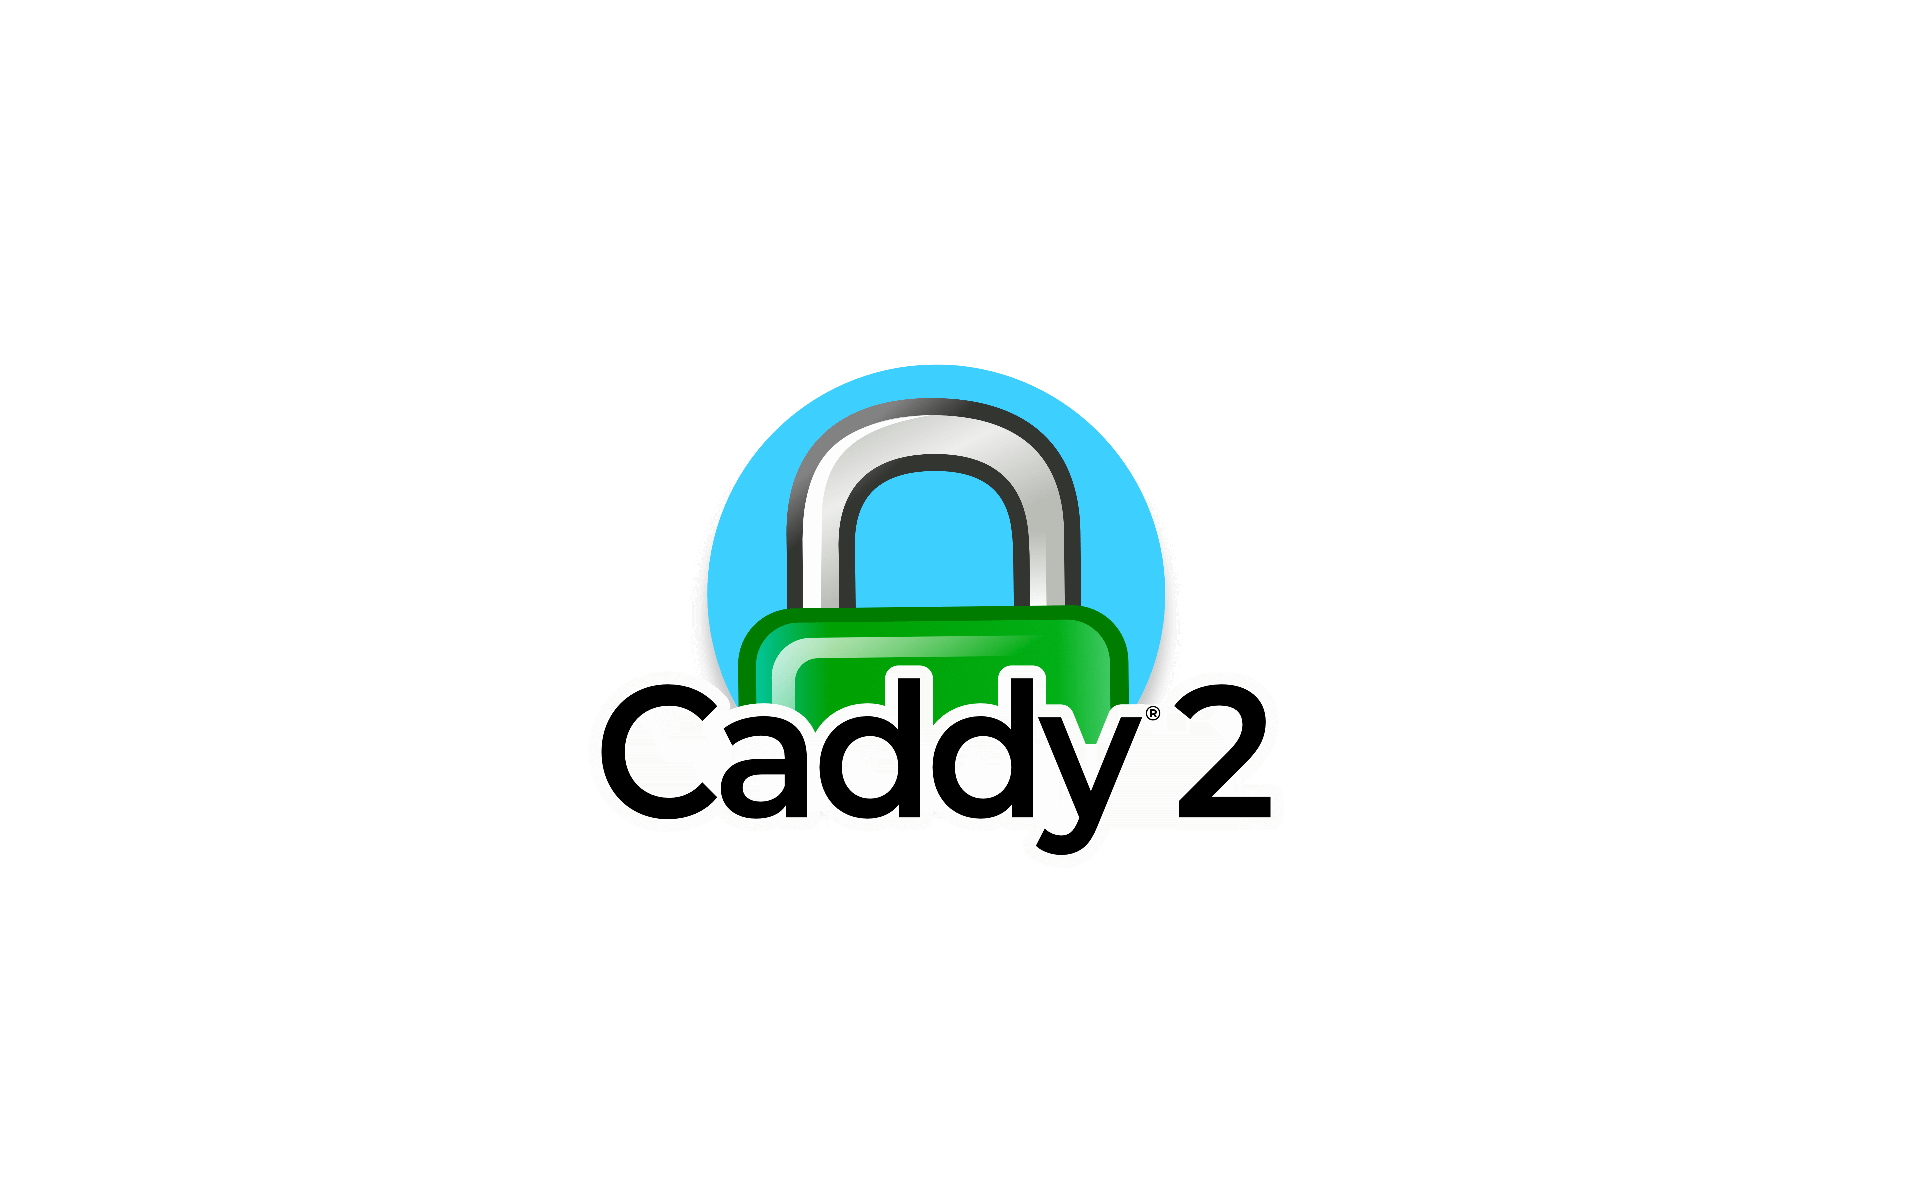 SetUp Caddy Web Server with Docker